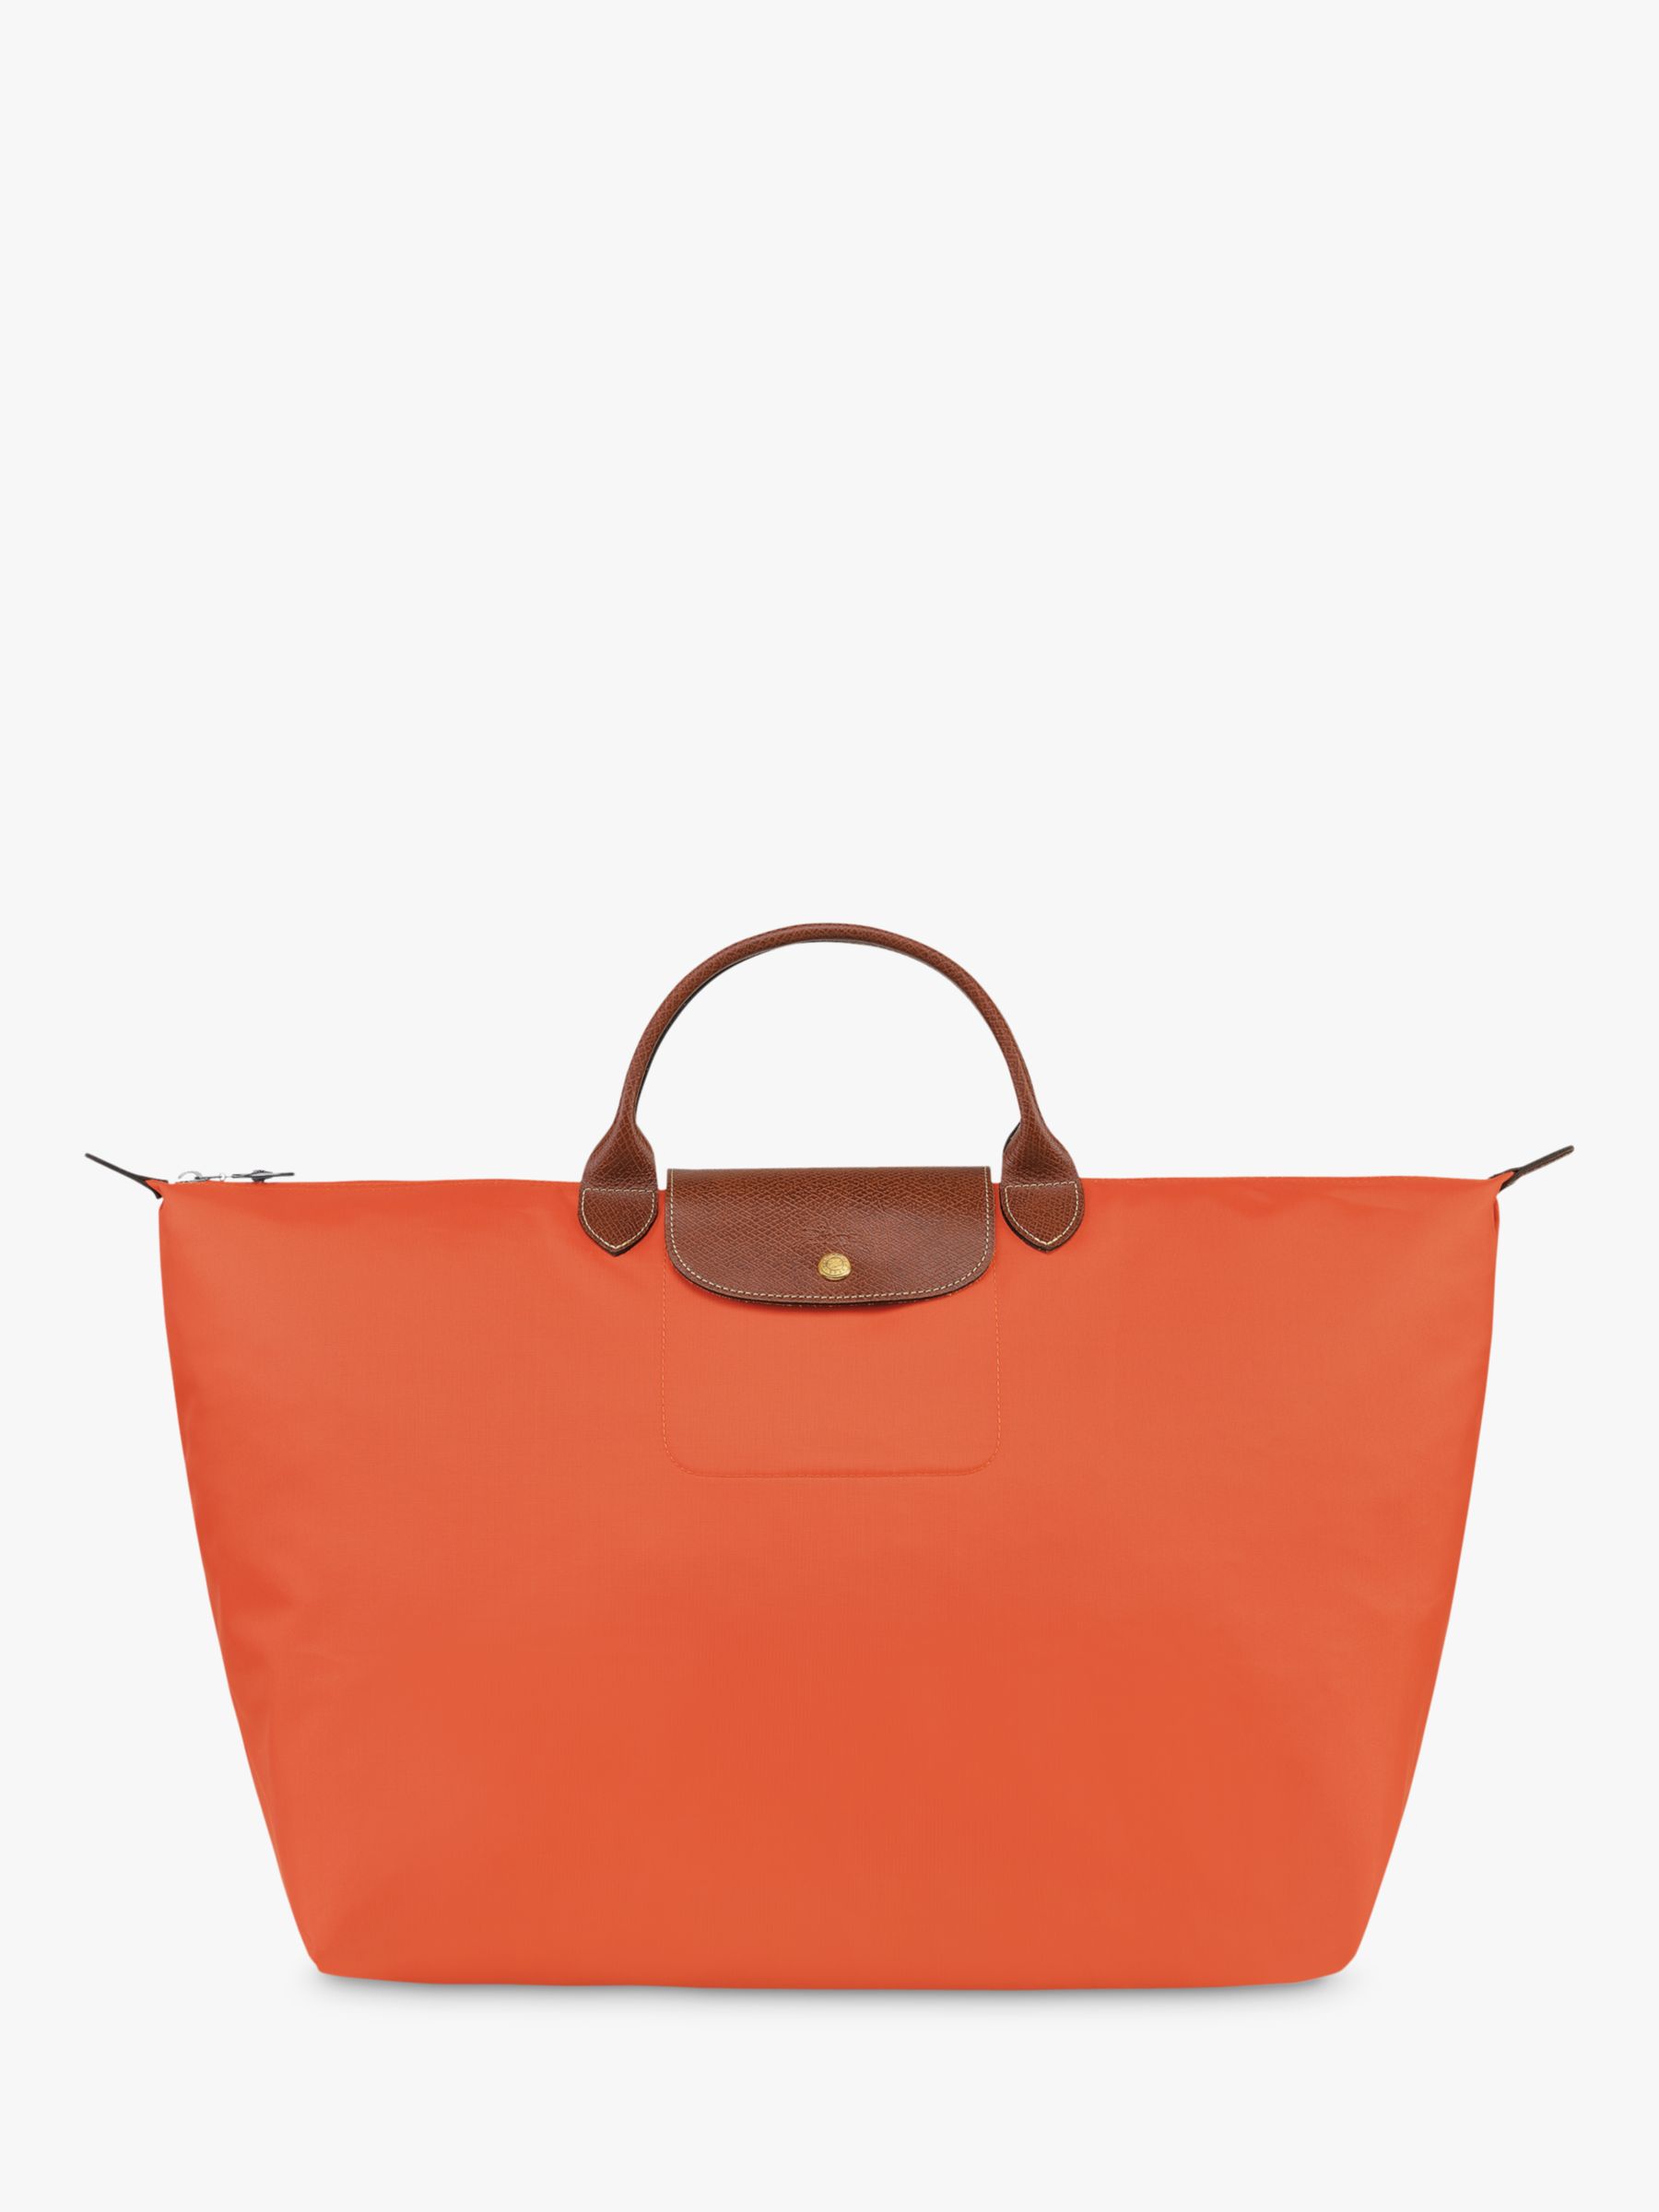 Longchamp Le Pliage Original Travel Bag, Orange at John Lewis & Partners